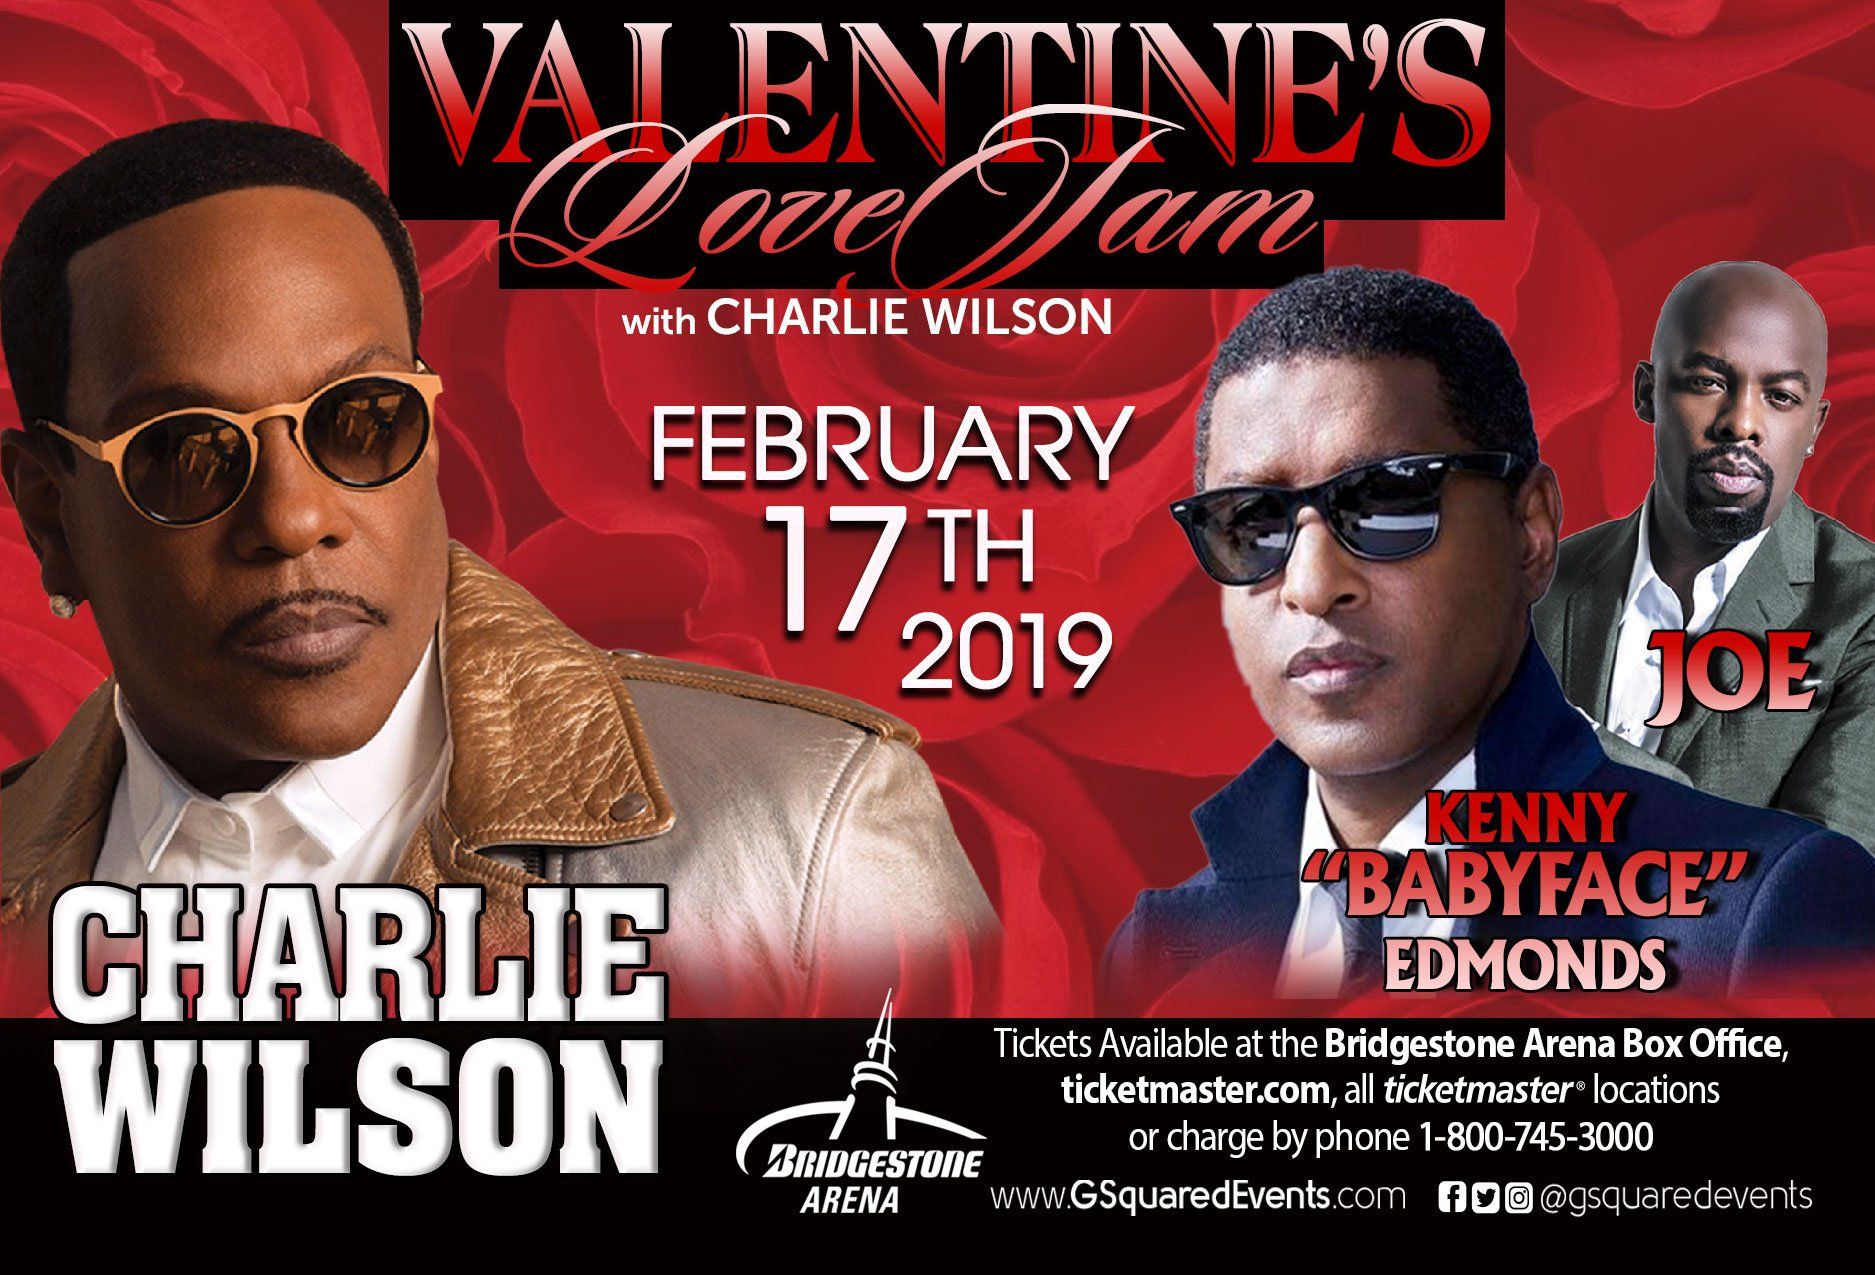 Valentine's Love Jam with Charlie Wilson